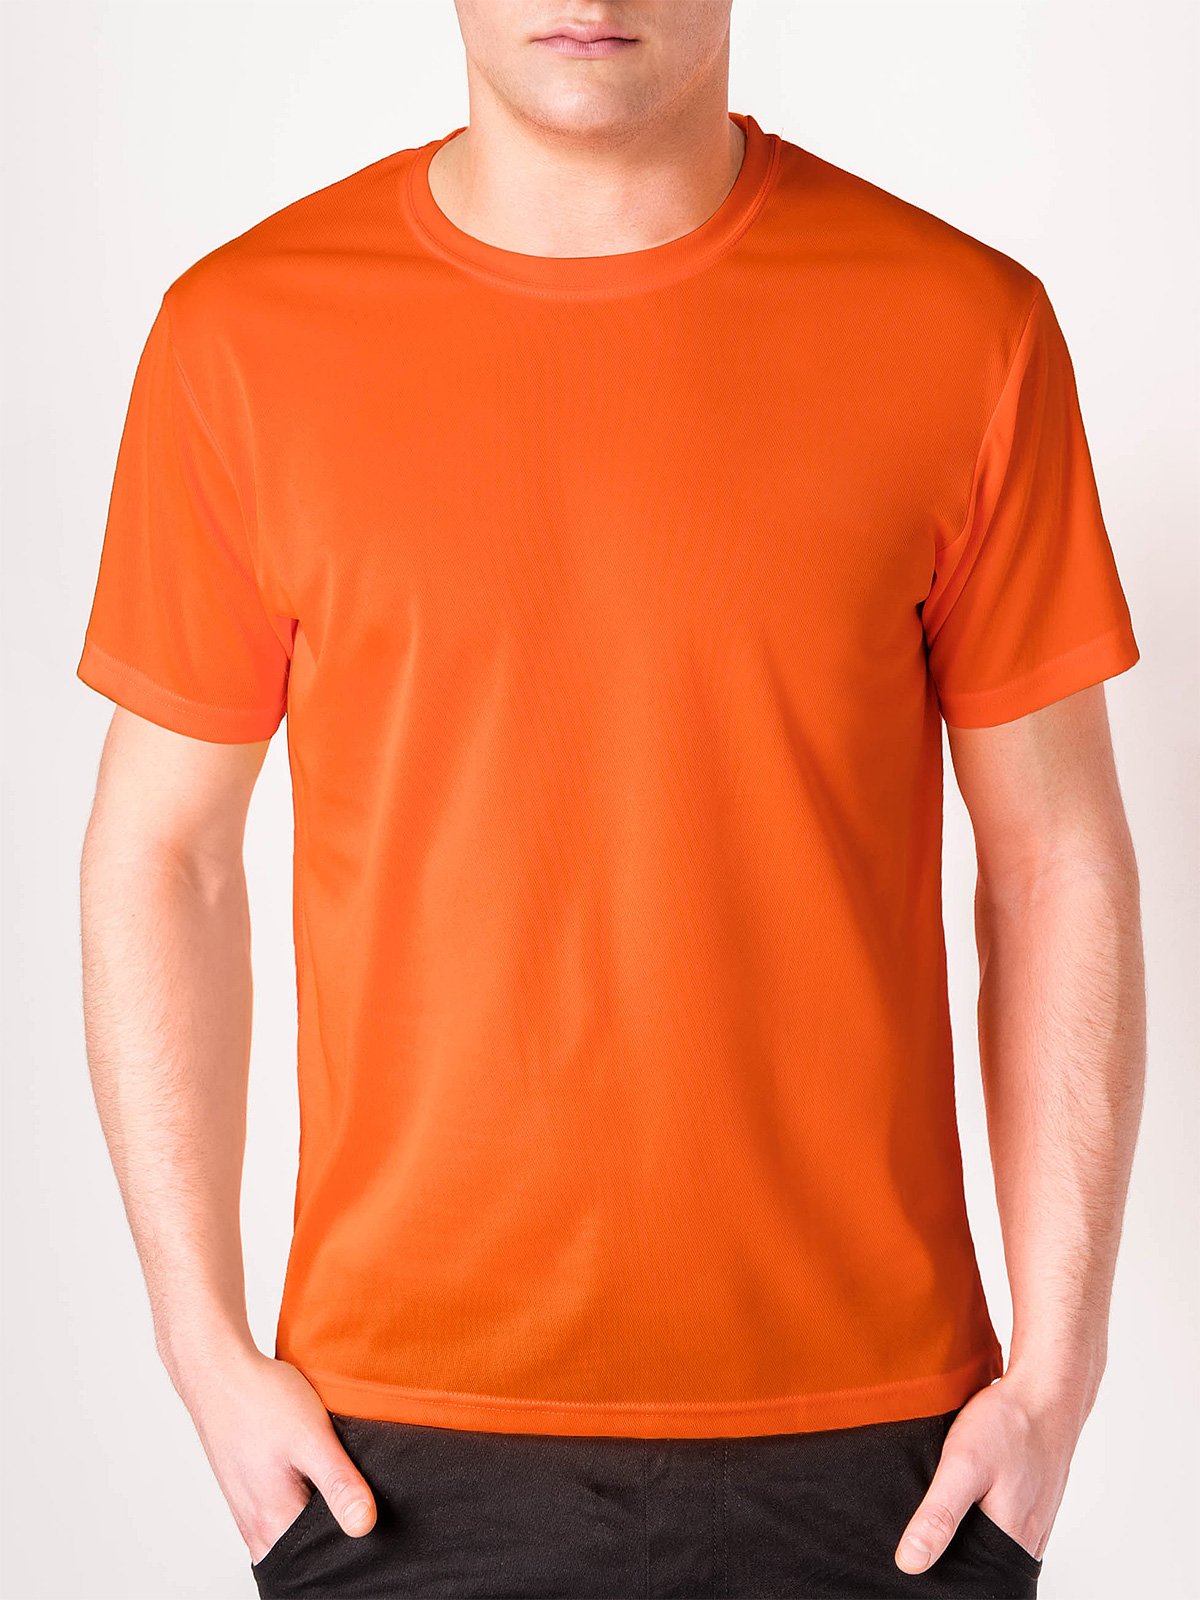 Men's plain t-shirt S883 - orange | MODONE wholesale - Clothing For Men